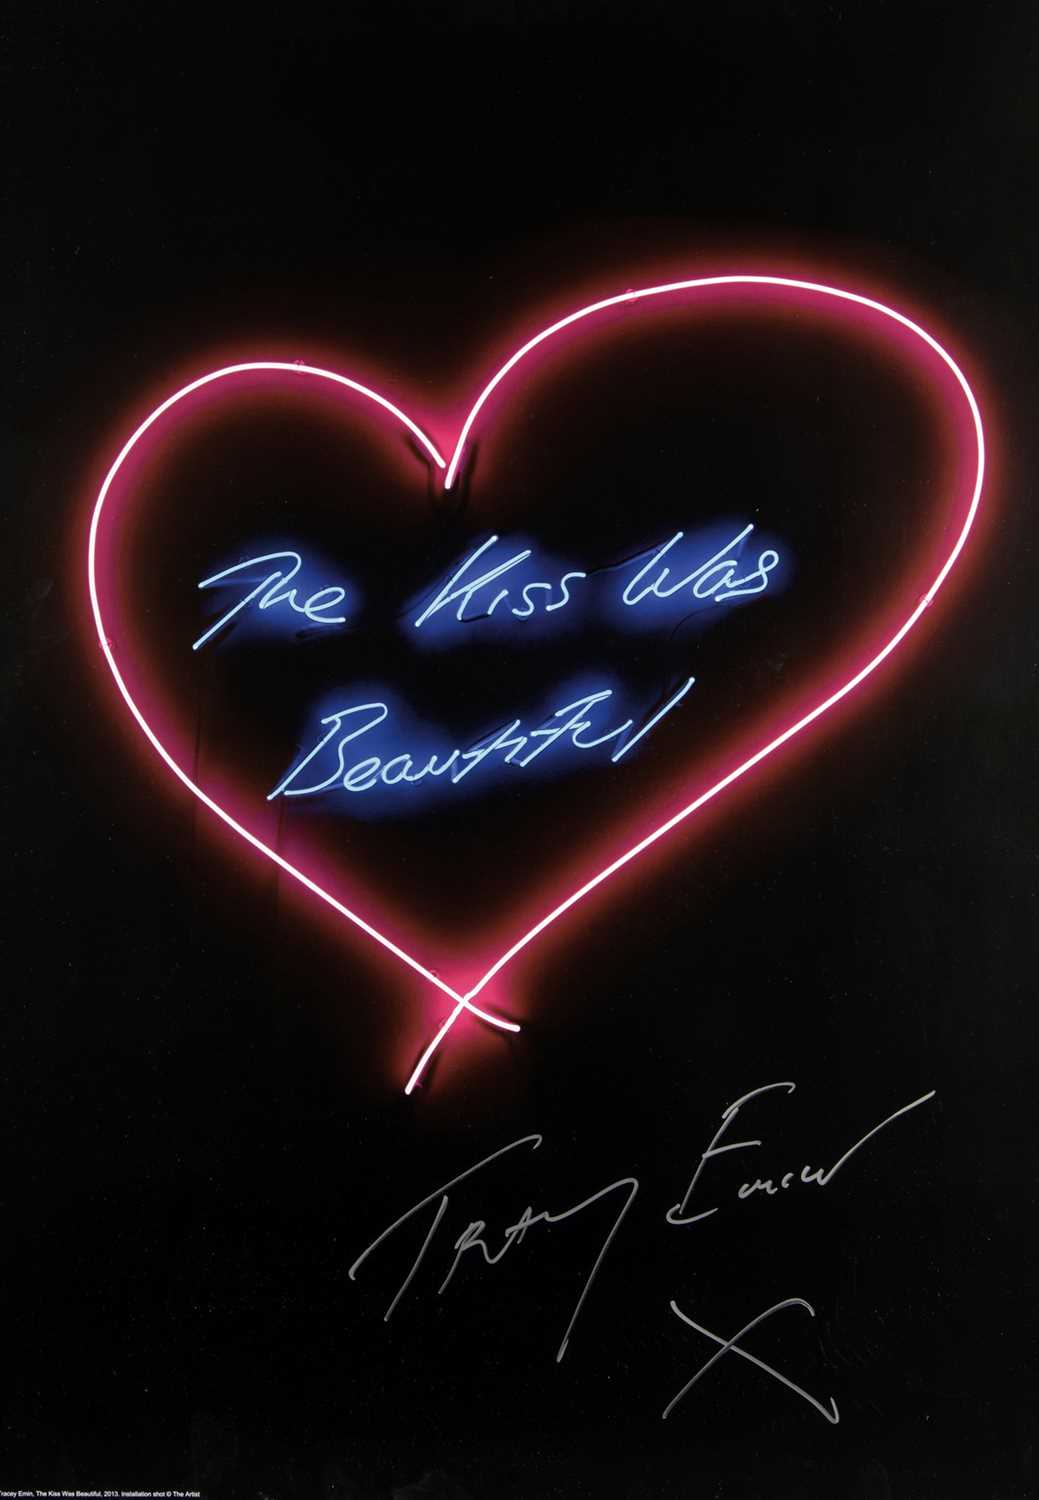 Lot 61 - Tracey Emin (British 1963-), 'The Kiss Was Beautiful’, 2016